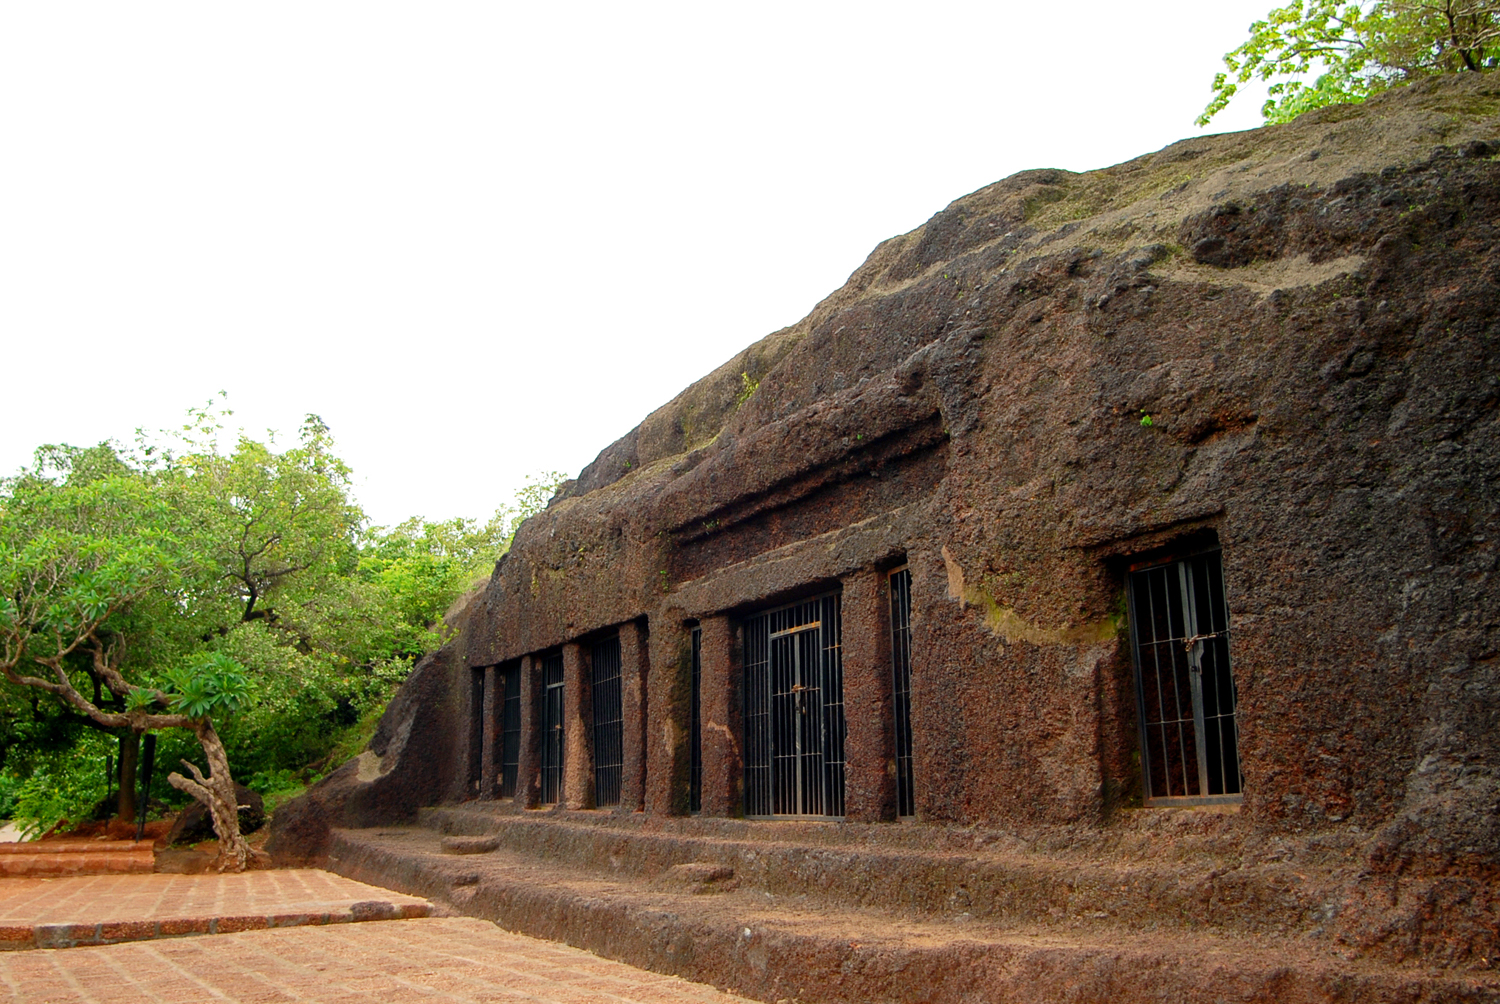 Arvalem Caves, Goa